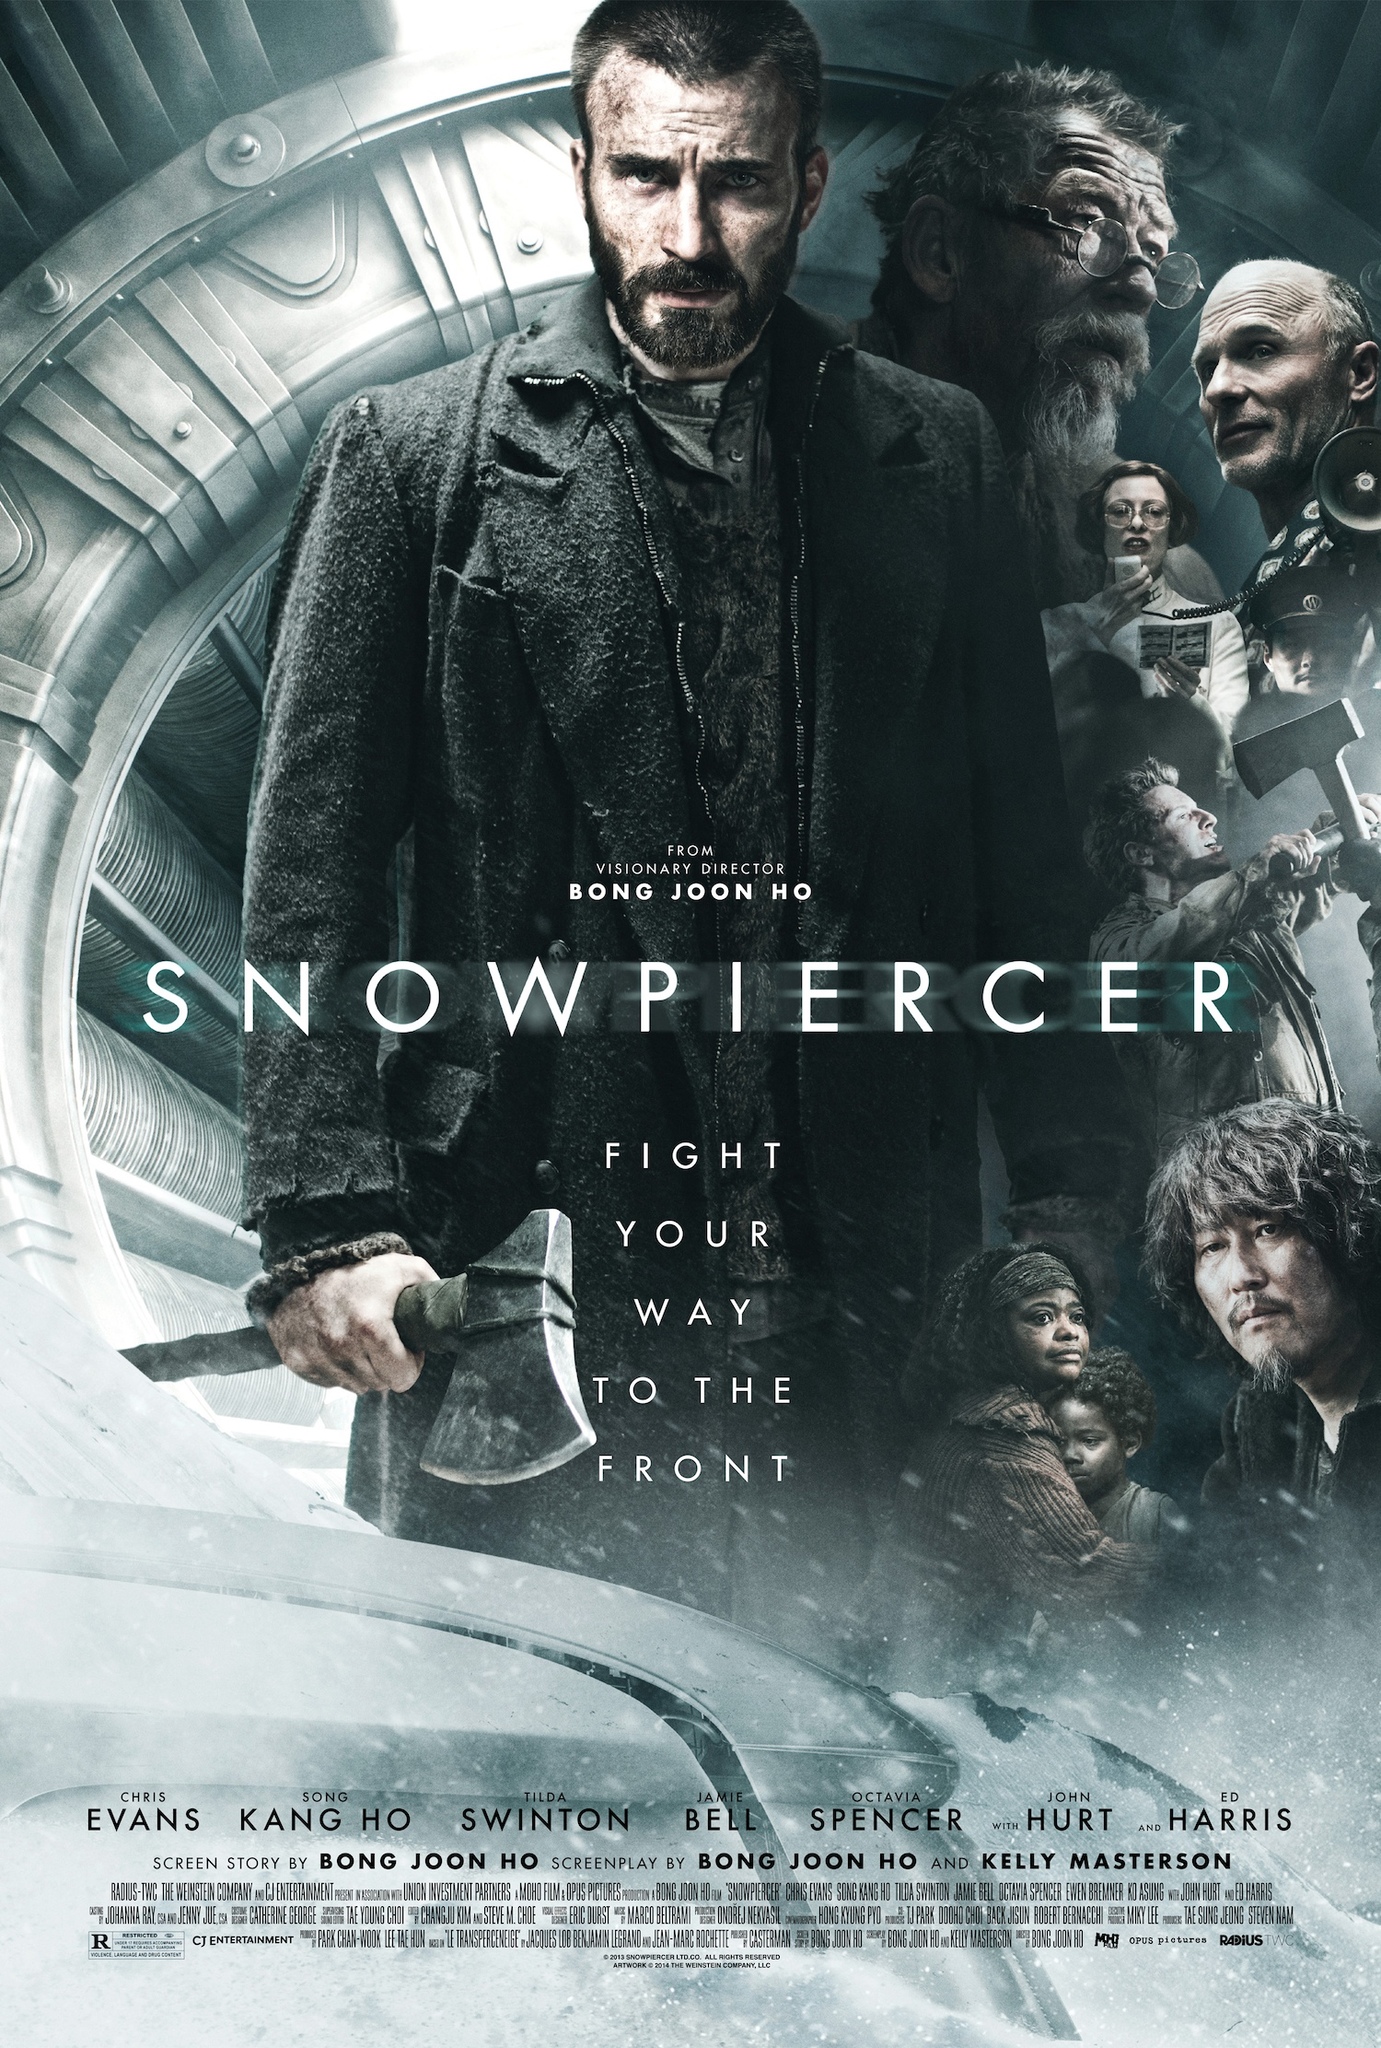 Snowpiercer sci-fi movies on Netflix